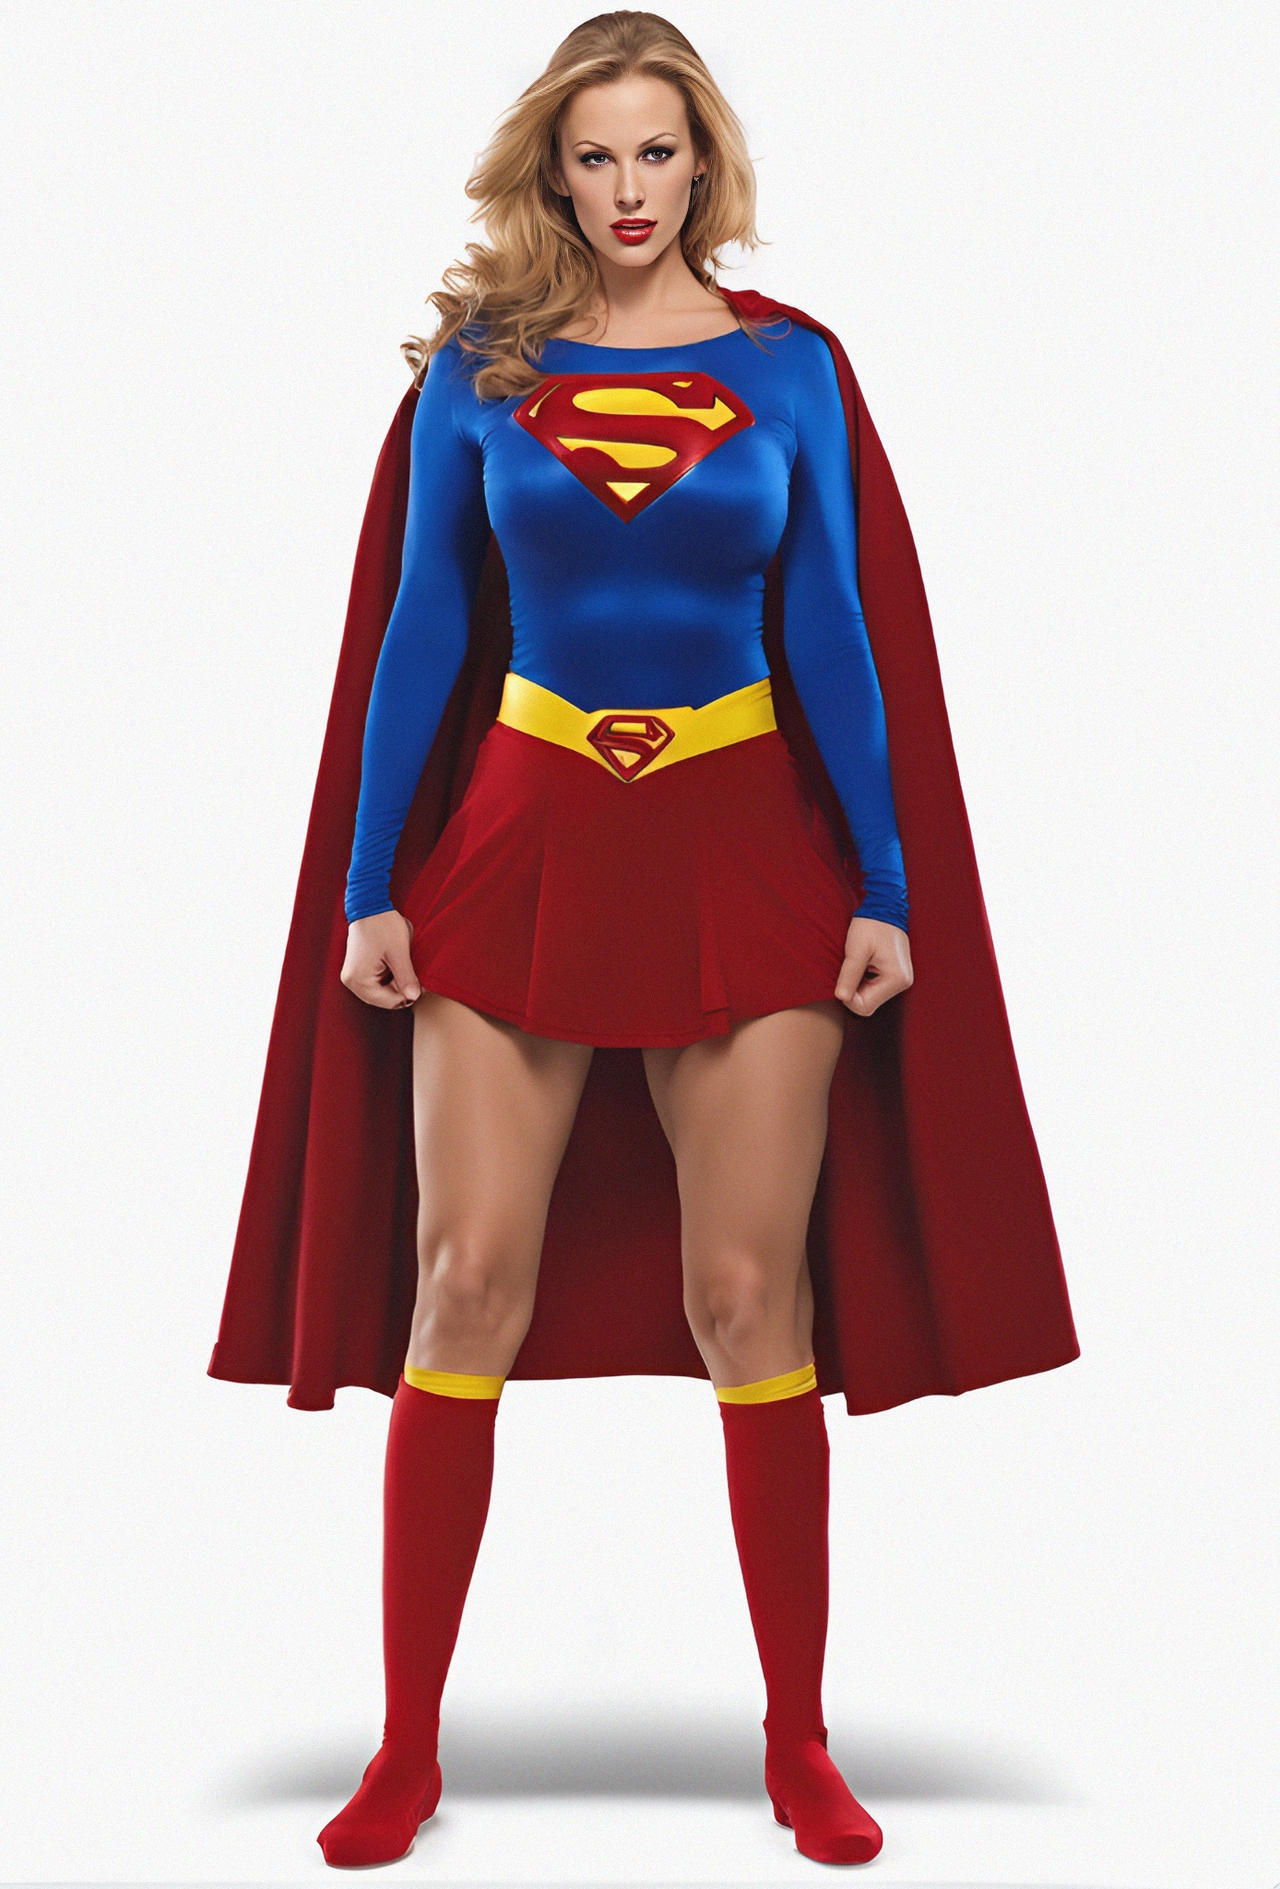 Jordan Carver Supergirl 29 By Tmhd77 On Deviantart